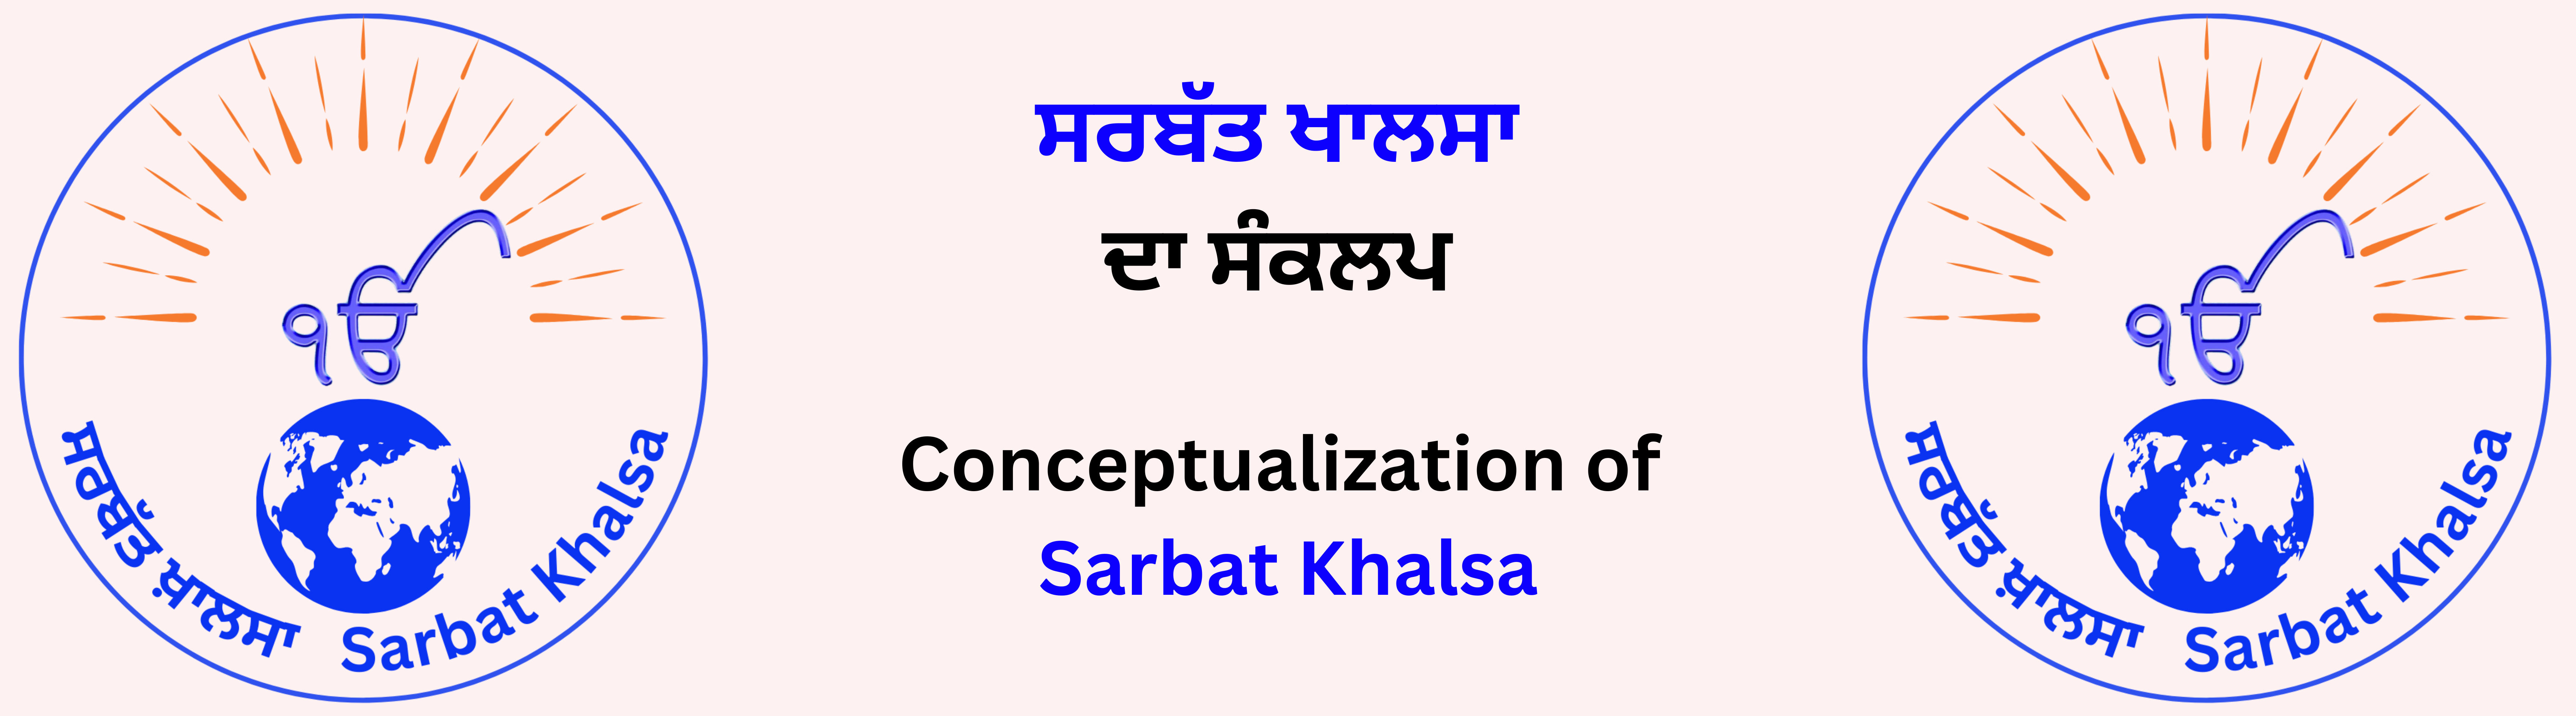 Conceptualization of Sarbat Khalsa Banner